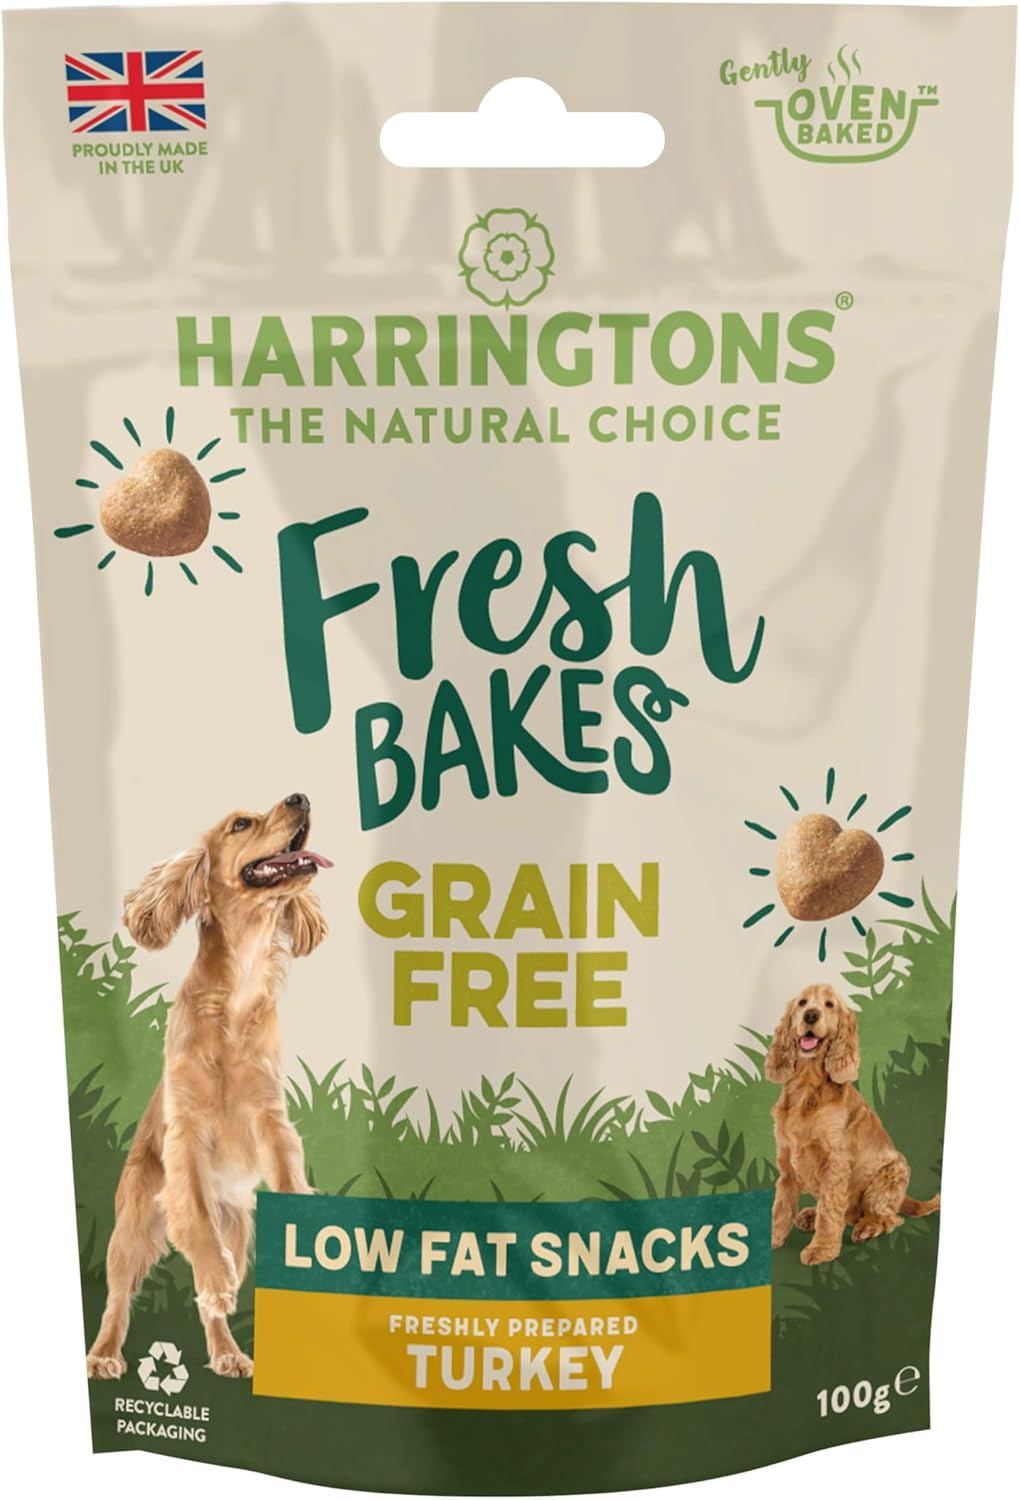 Harringtons Fresh Bakes Grain Free Low Fat Lean Turkey Dog Treats 100g (Pack of 8) - Gently Oven Baked?HARRLT-C100